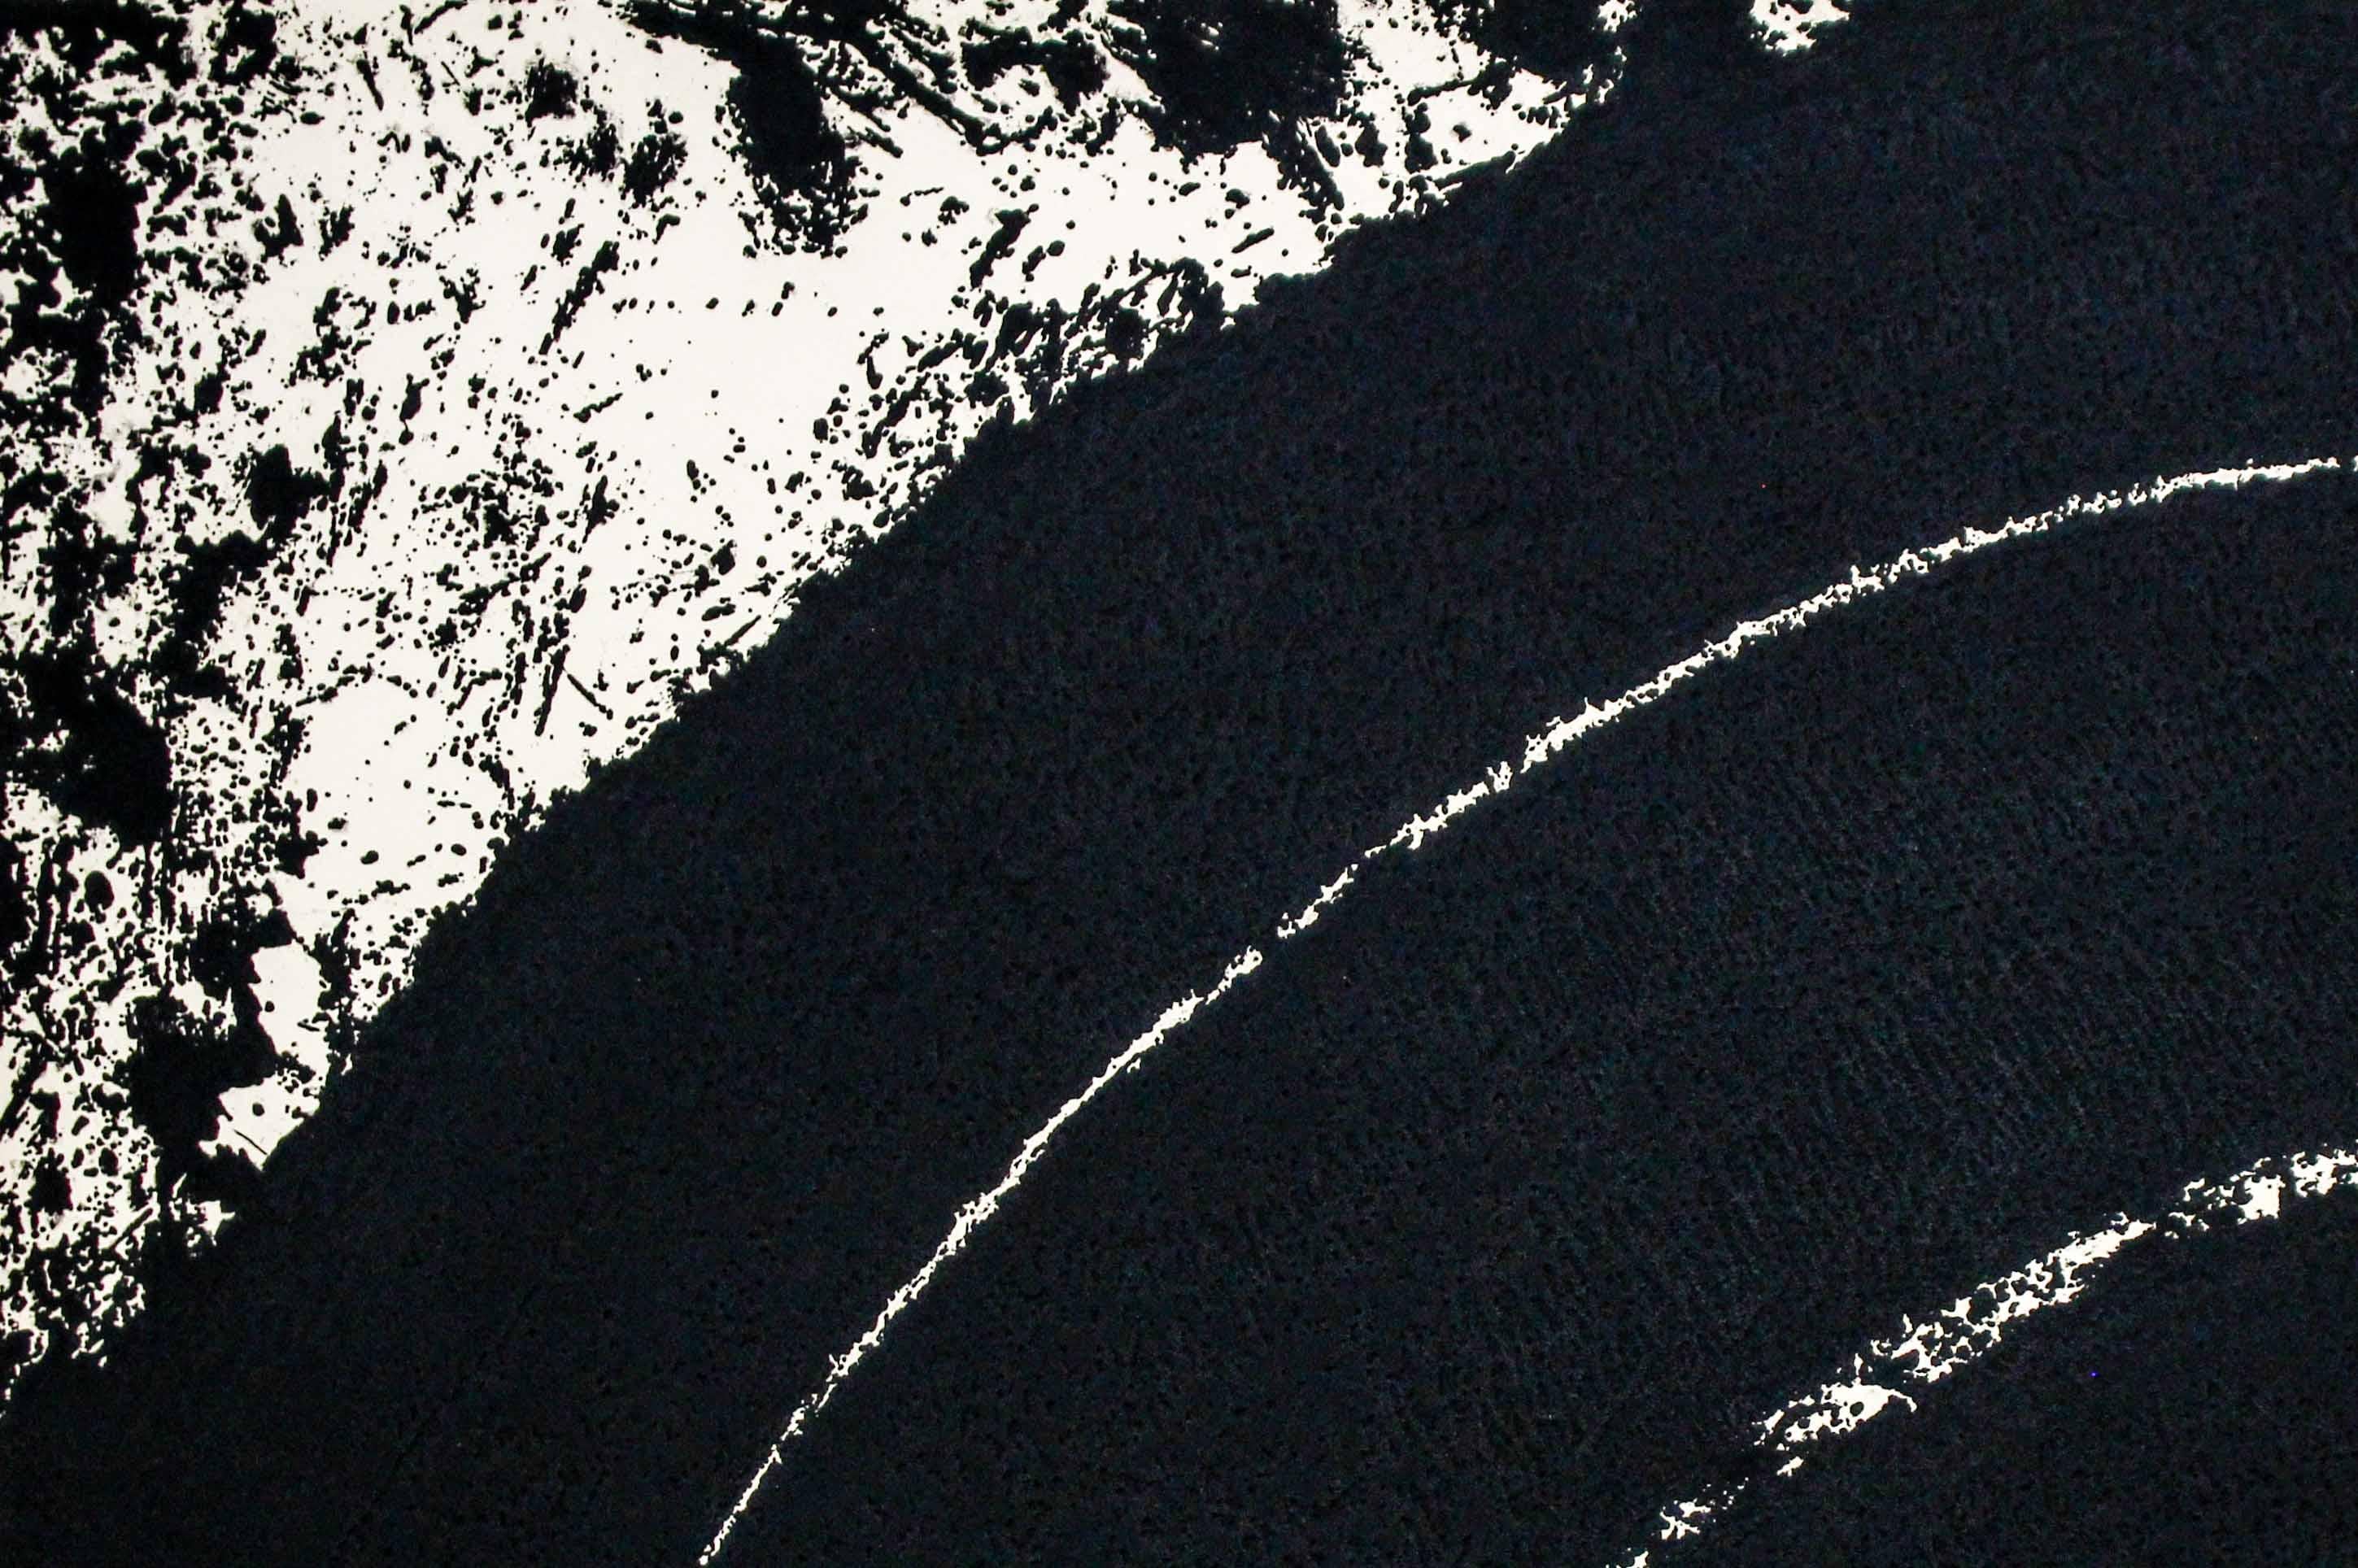 Richard Serra, Paths and Edges #13, 2007 1